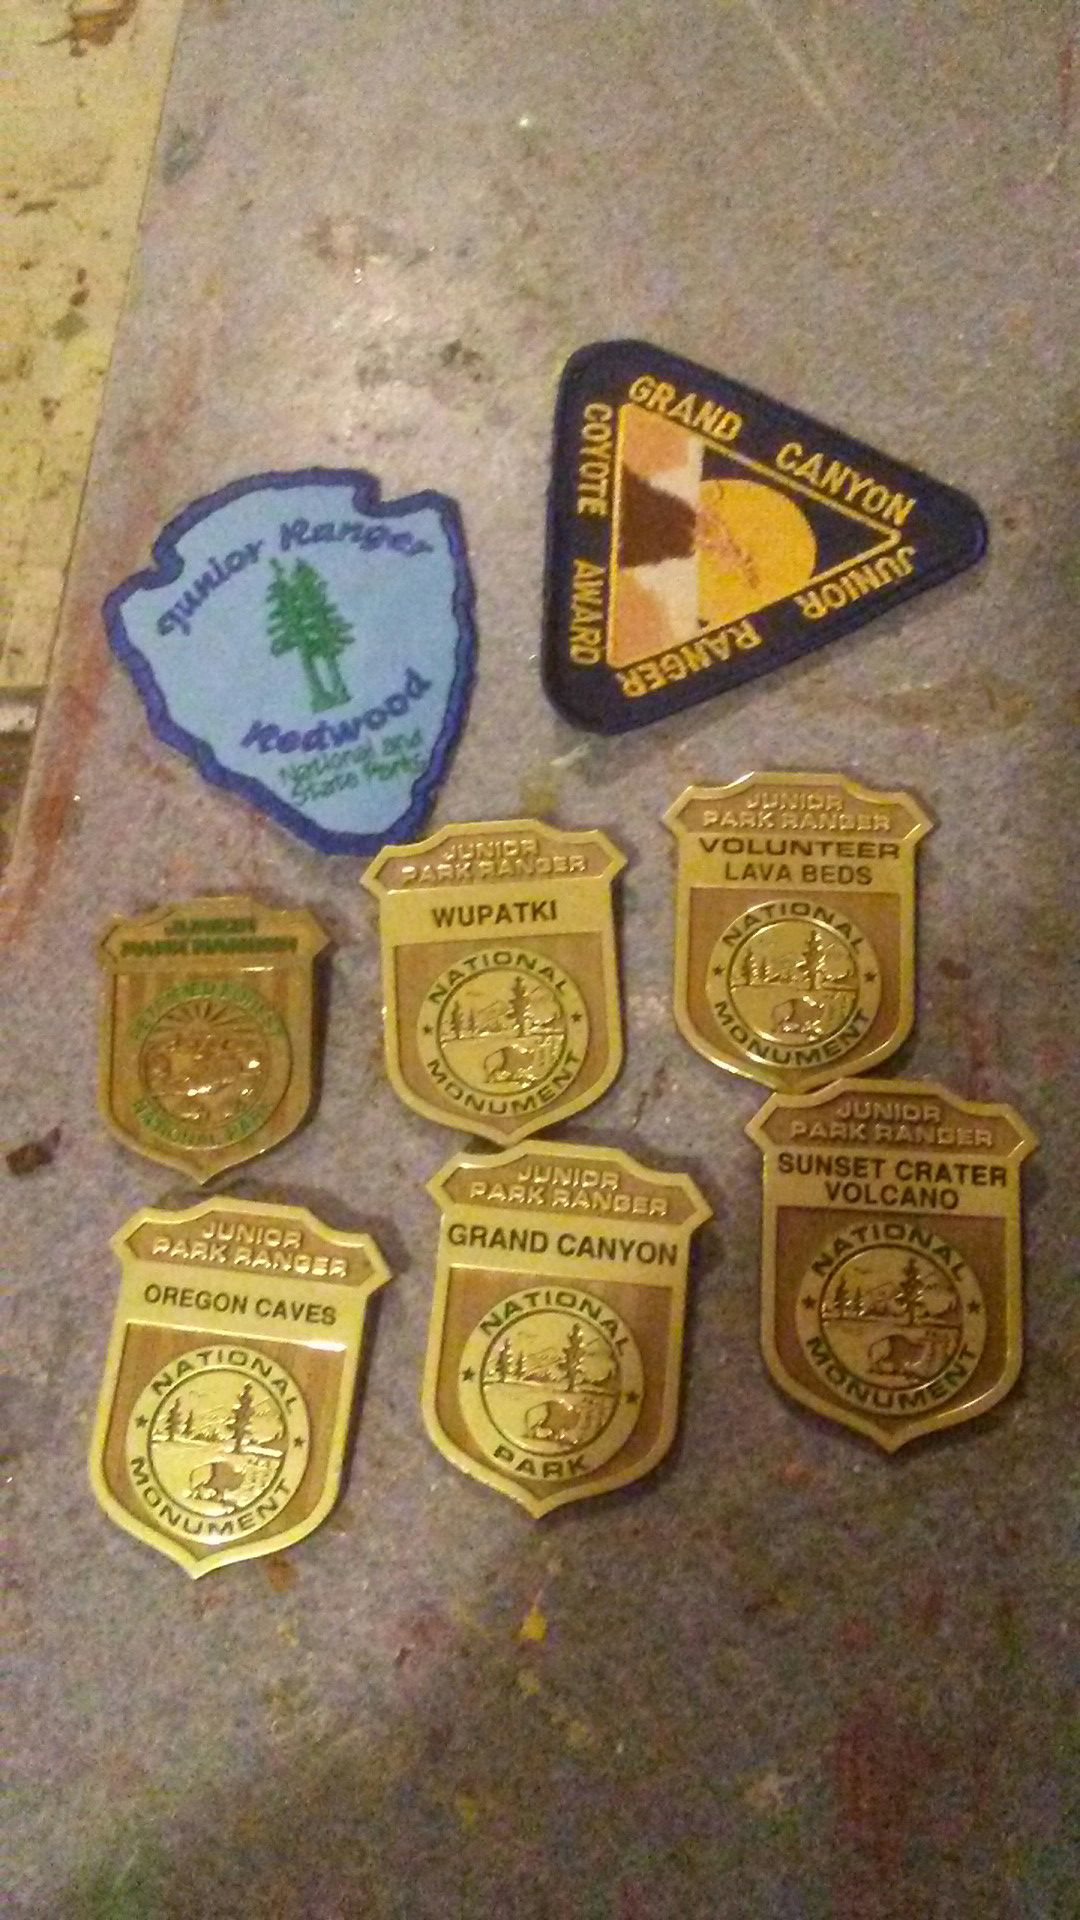 Junior park ranger badges